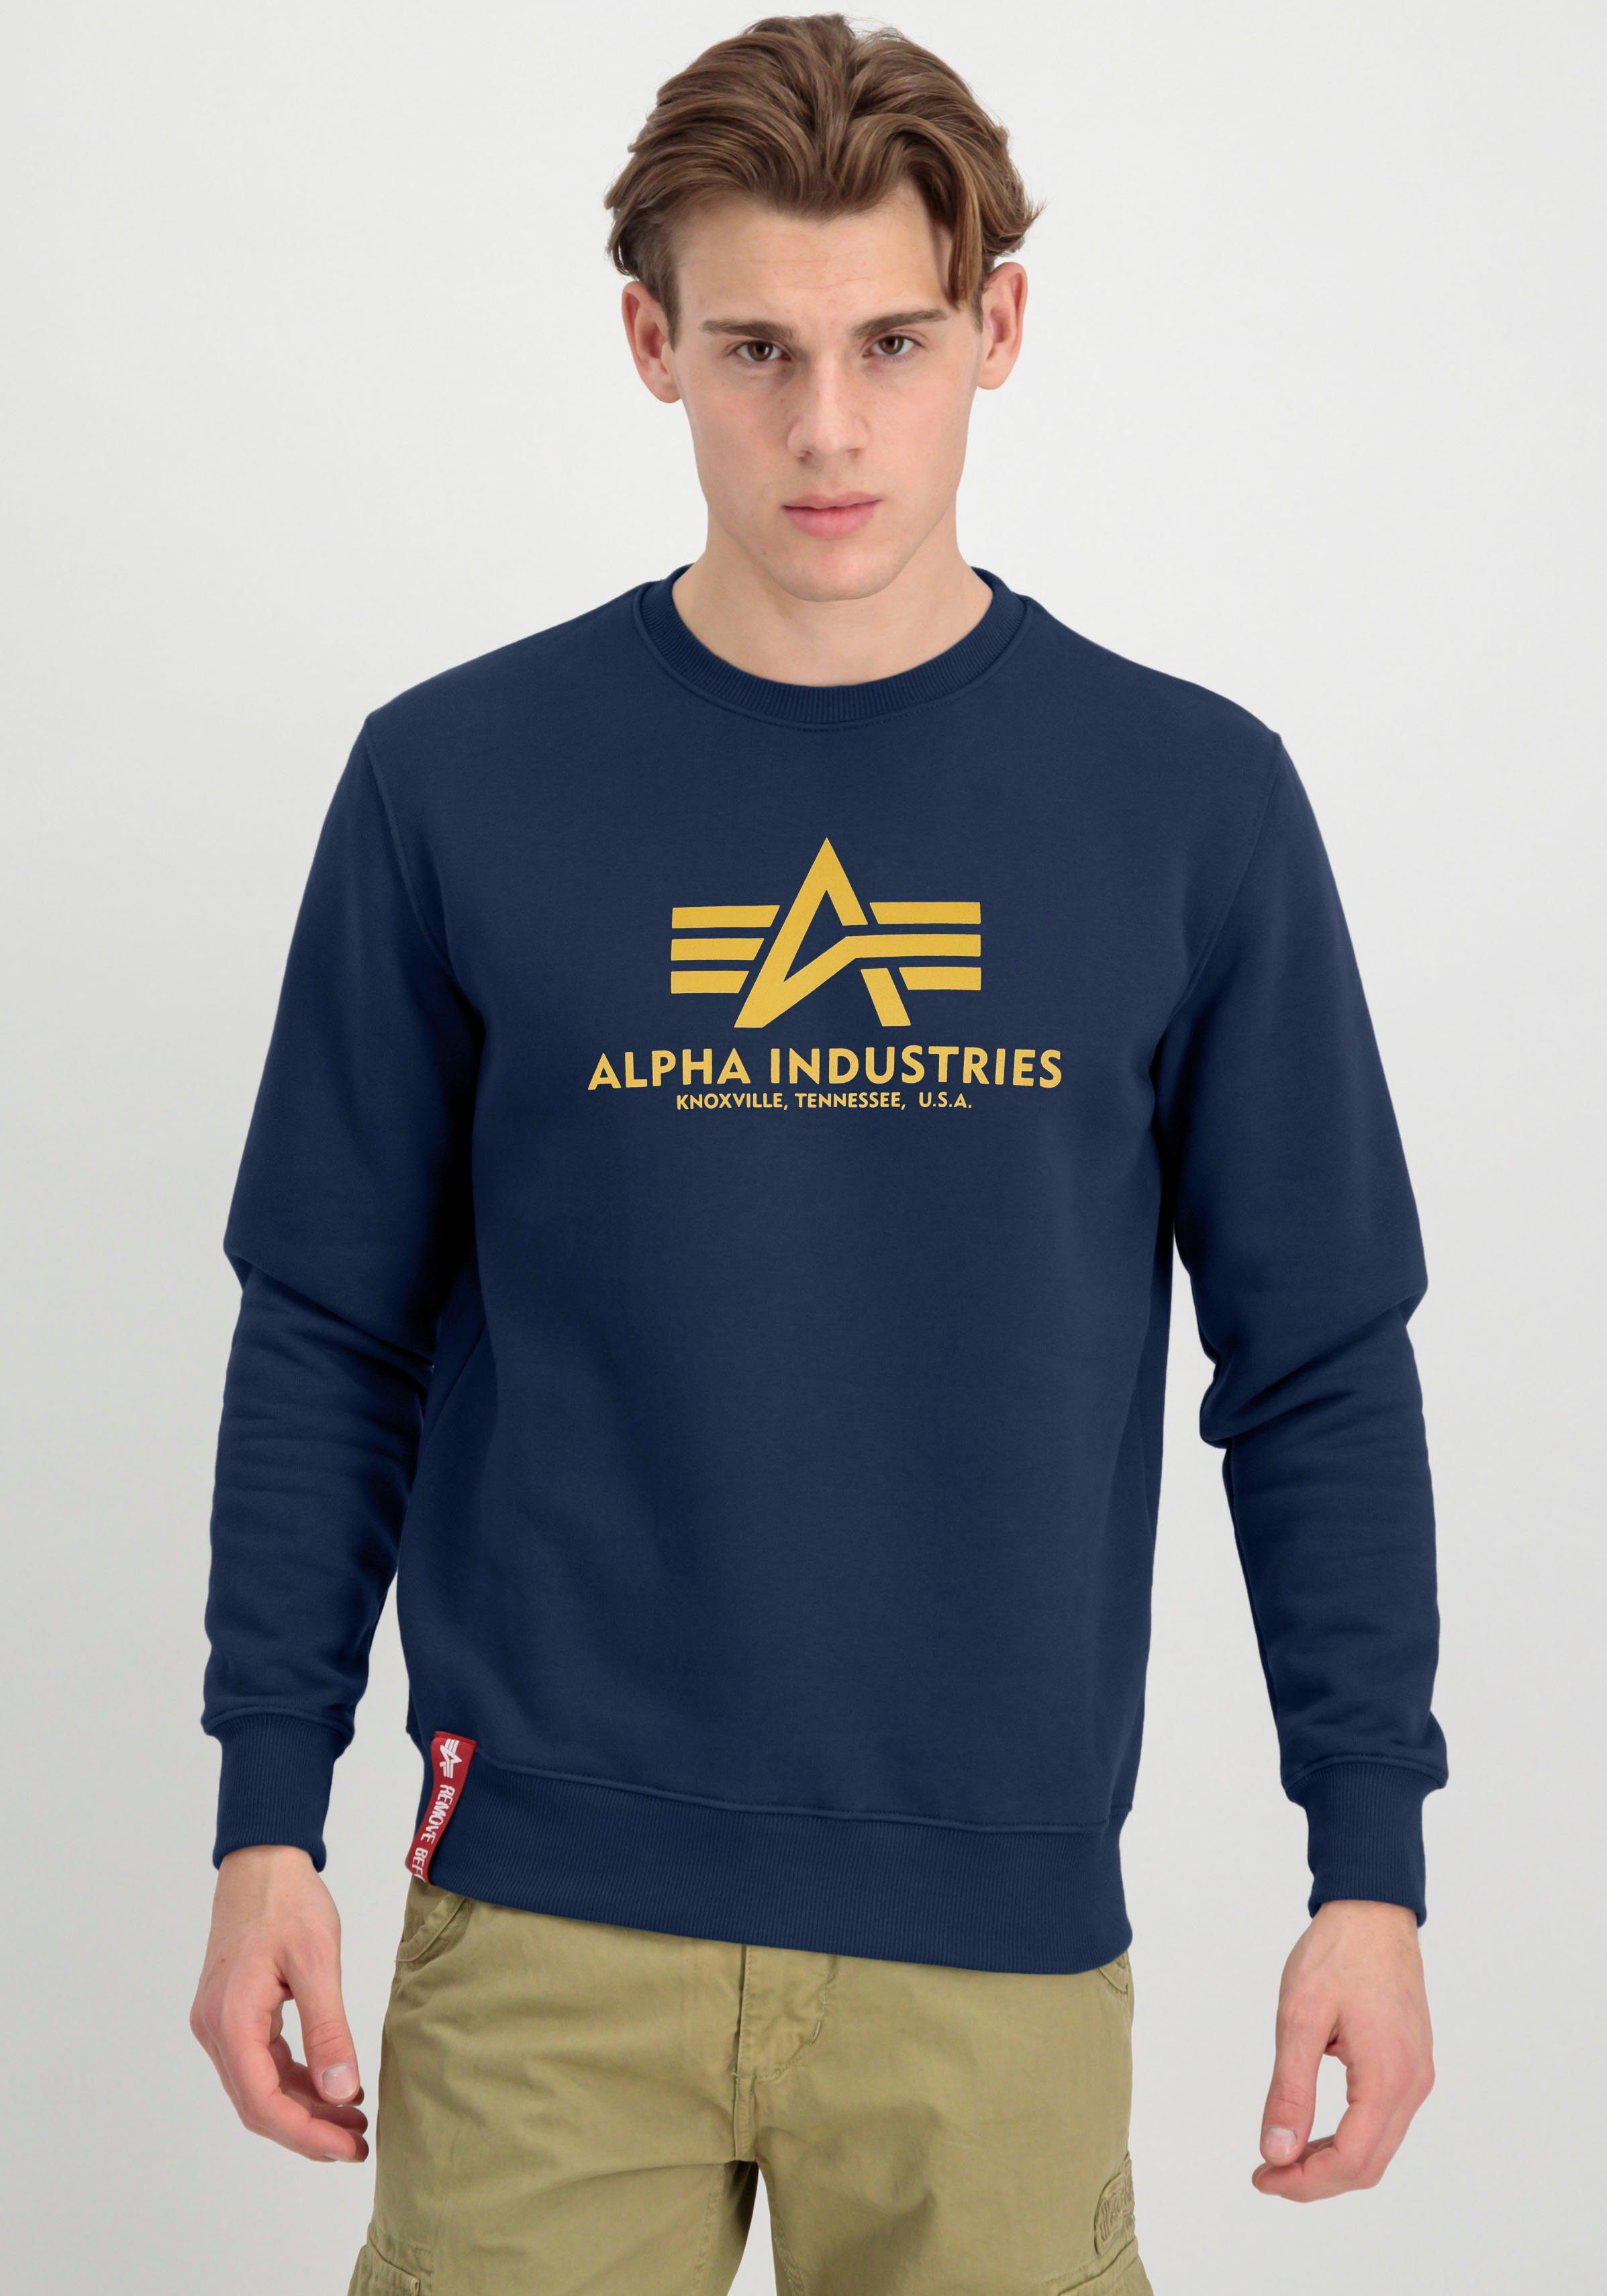 Sweater new navy Basic Alpha Sweatshirt Industries